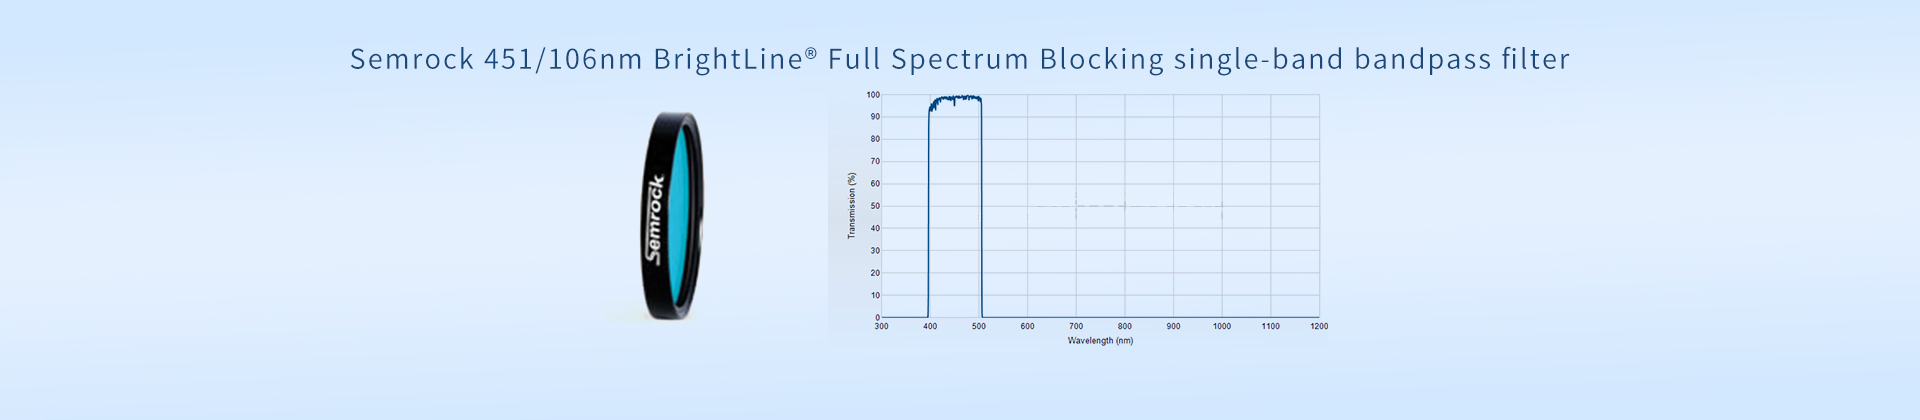 Semrock 451/106nm BrightLine® Full Spectrum Blocking single-band bandpass filter